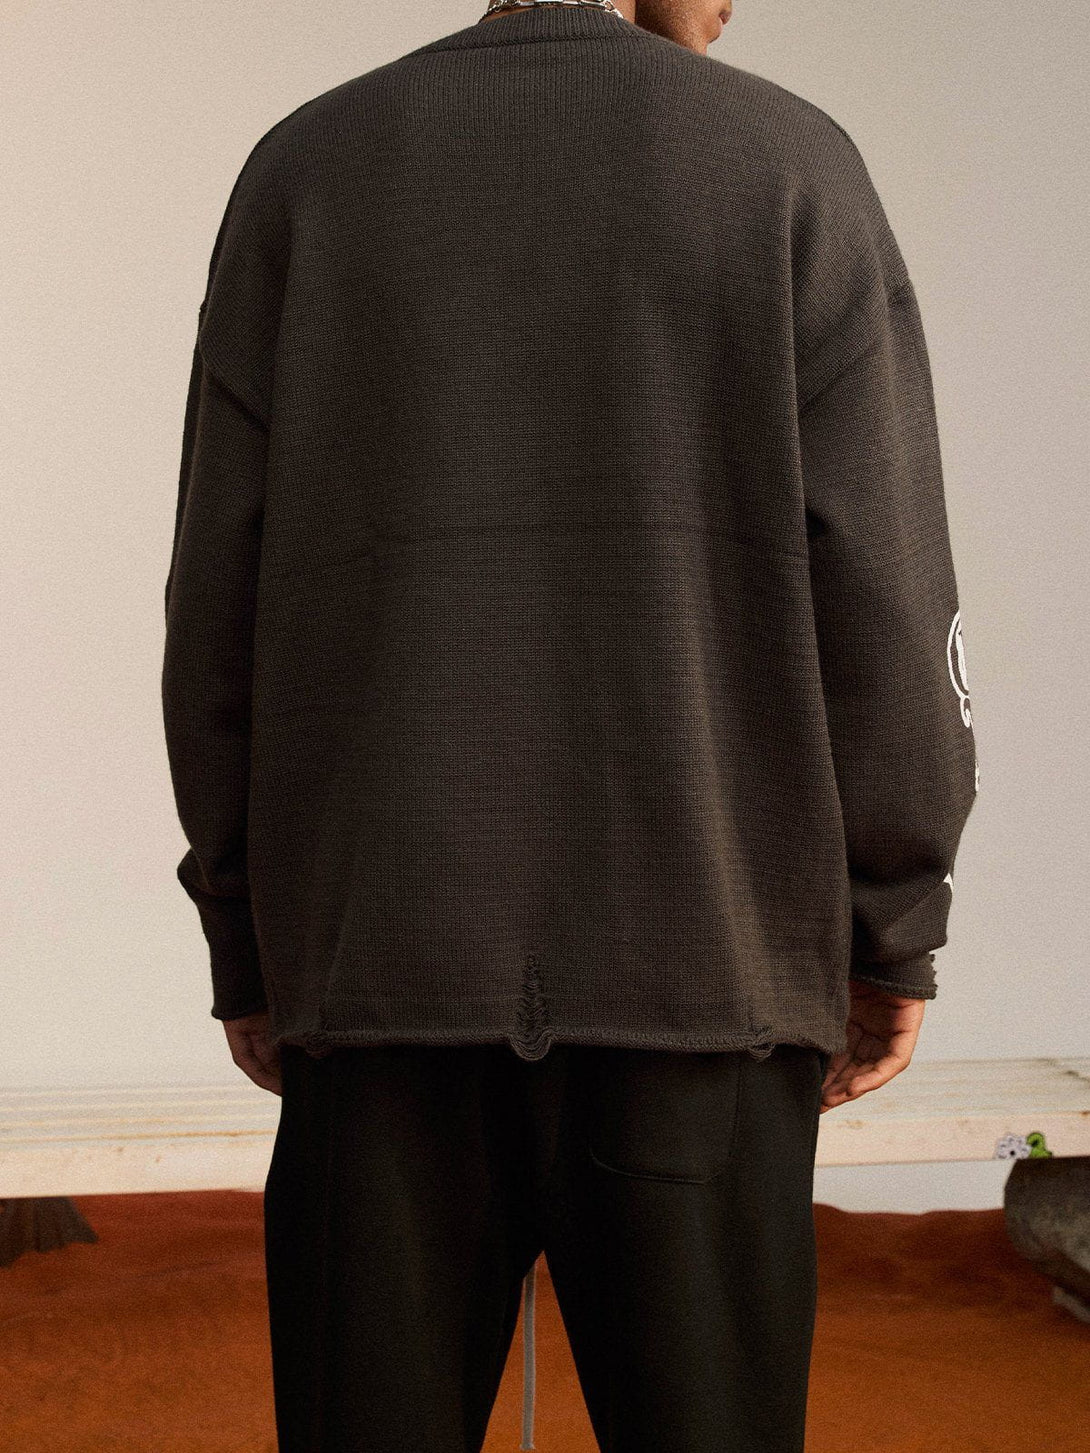 Majesda® - Scroll Print Ruined Ripped Sweater outfit ideas streetwear fashion